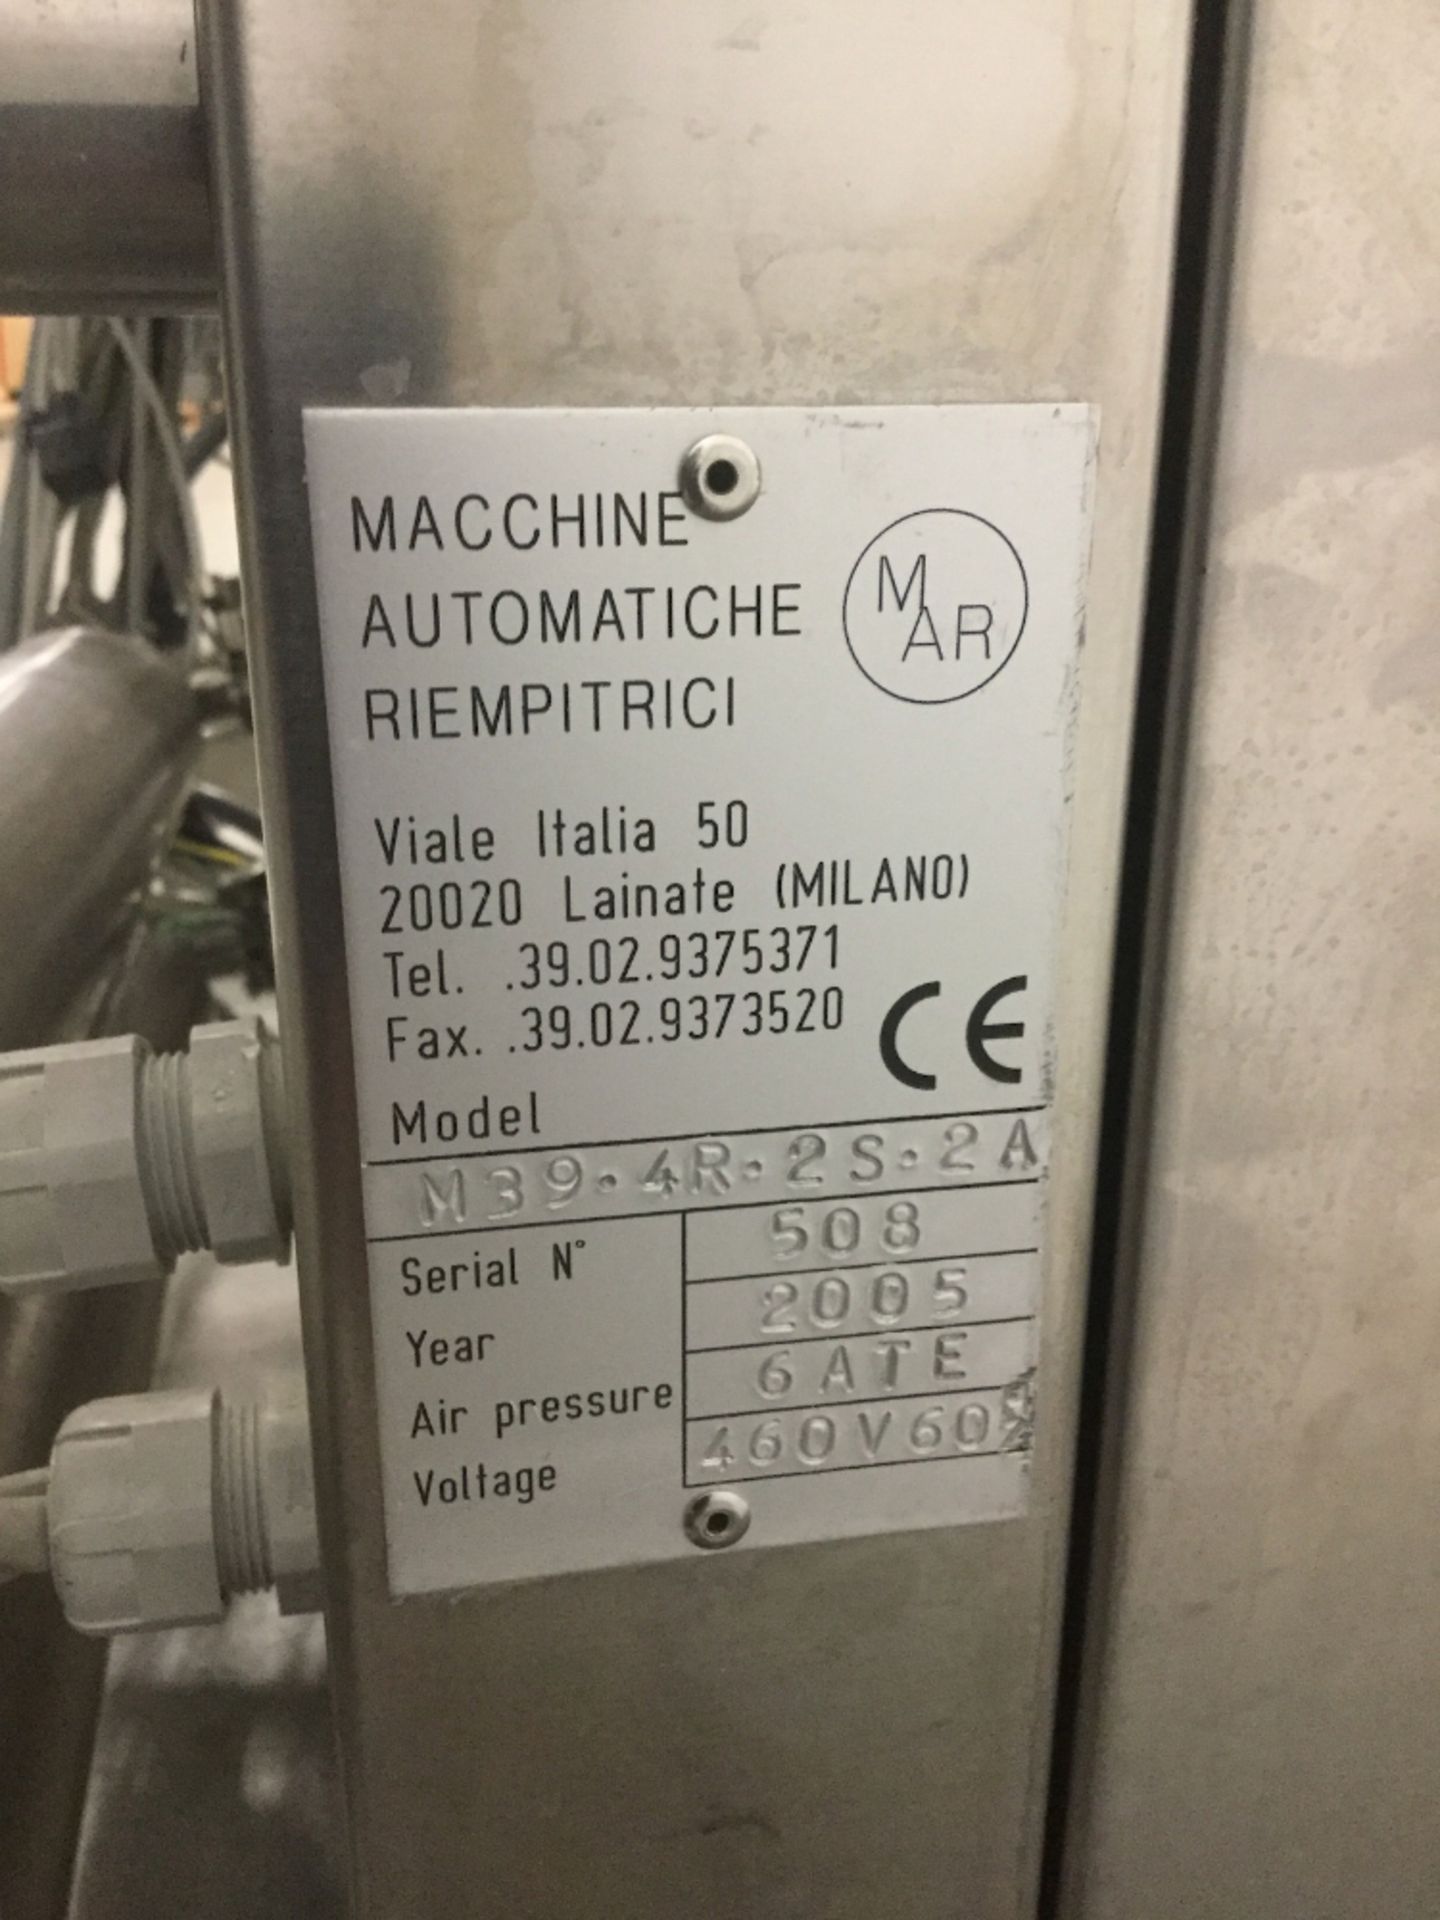 MAR Model M39-4R-2S-2A Liquid Filling Machine - Image 2 of 8